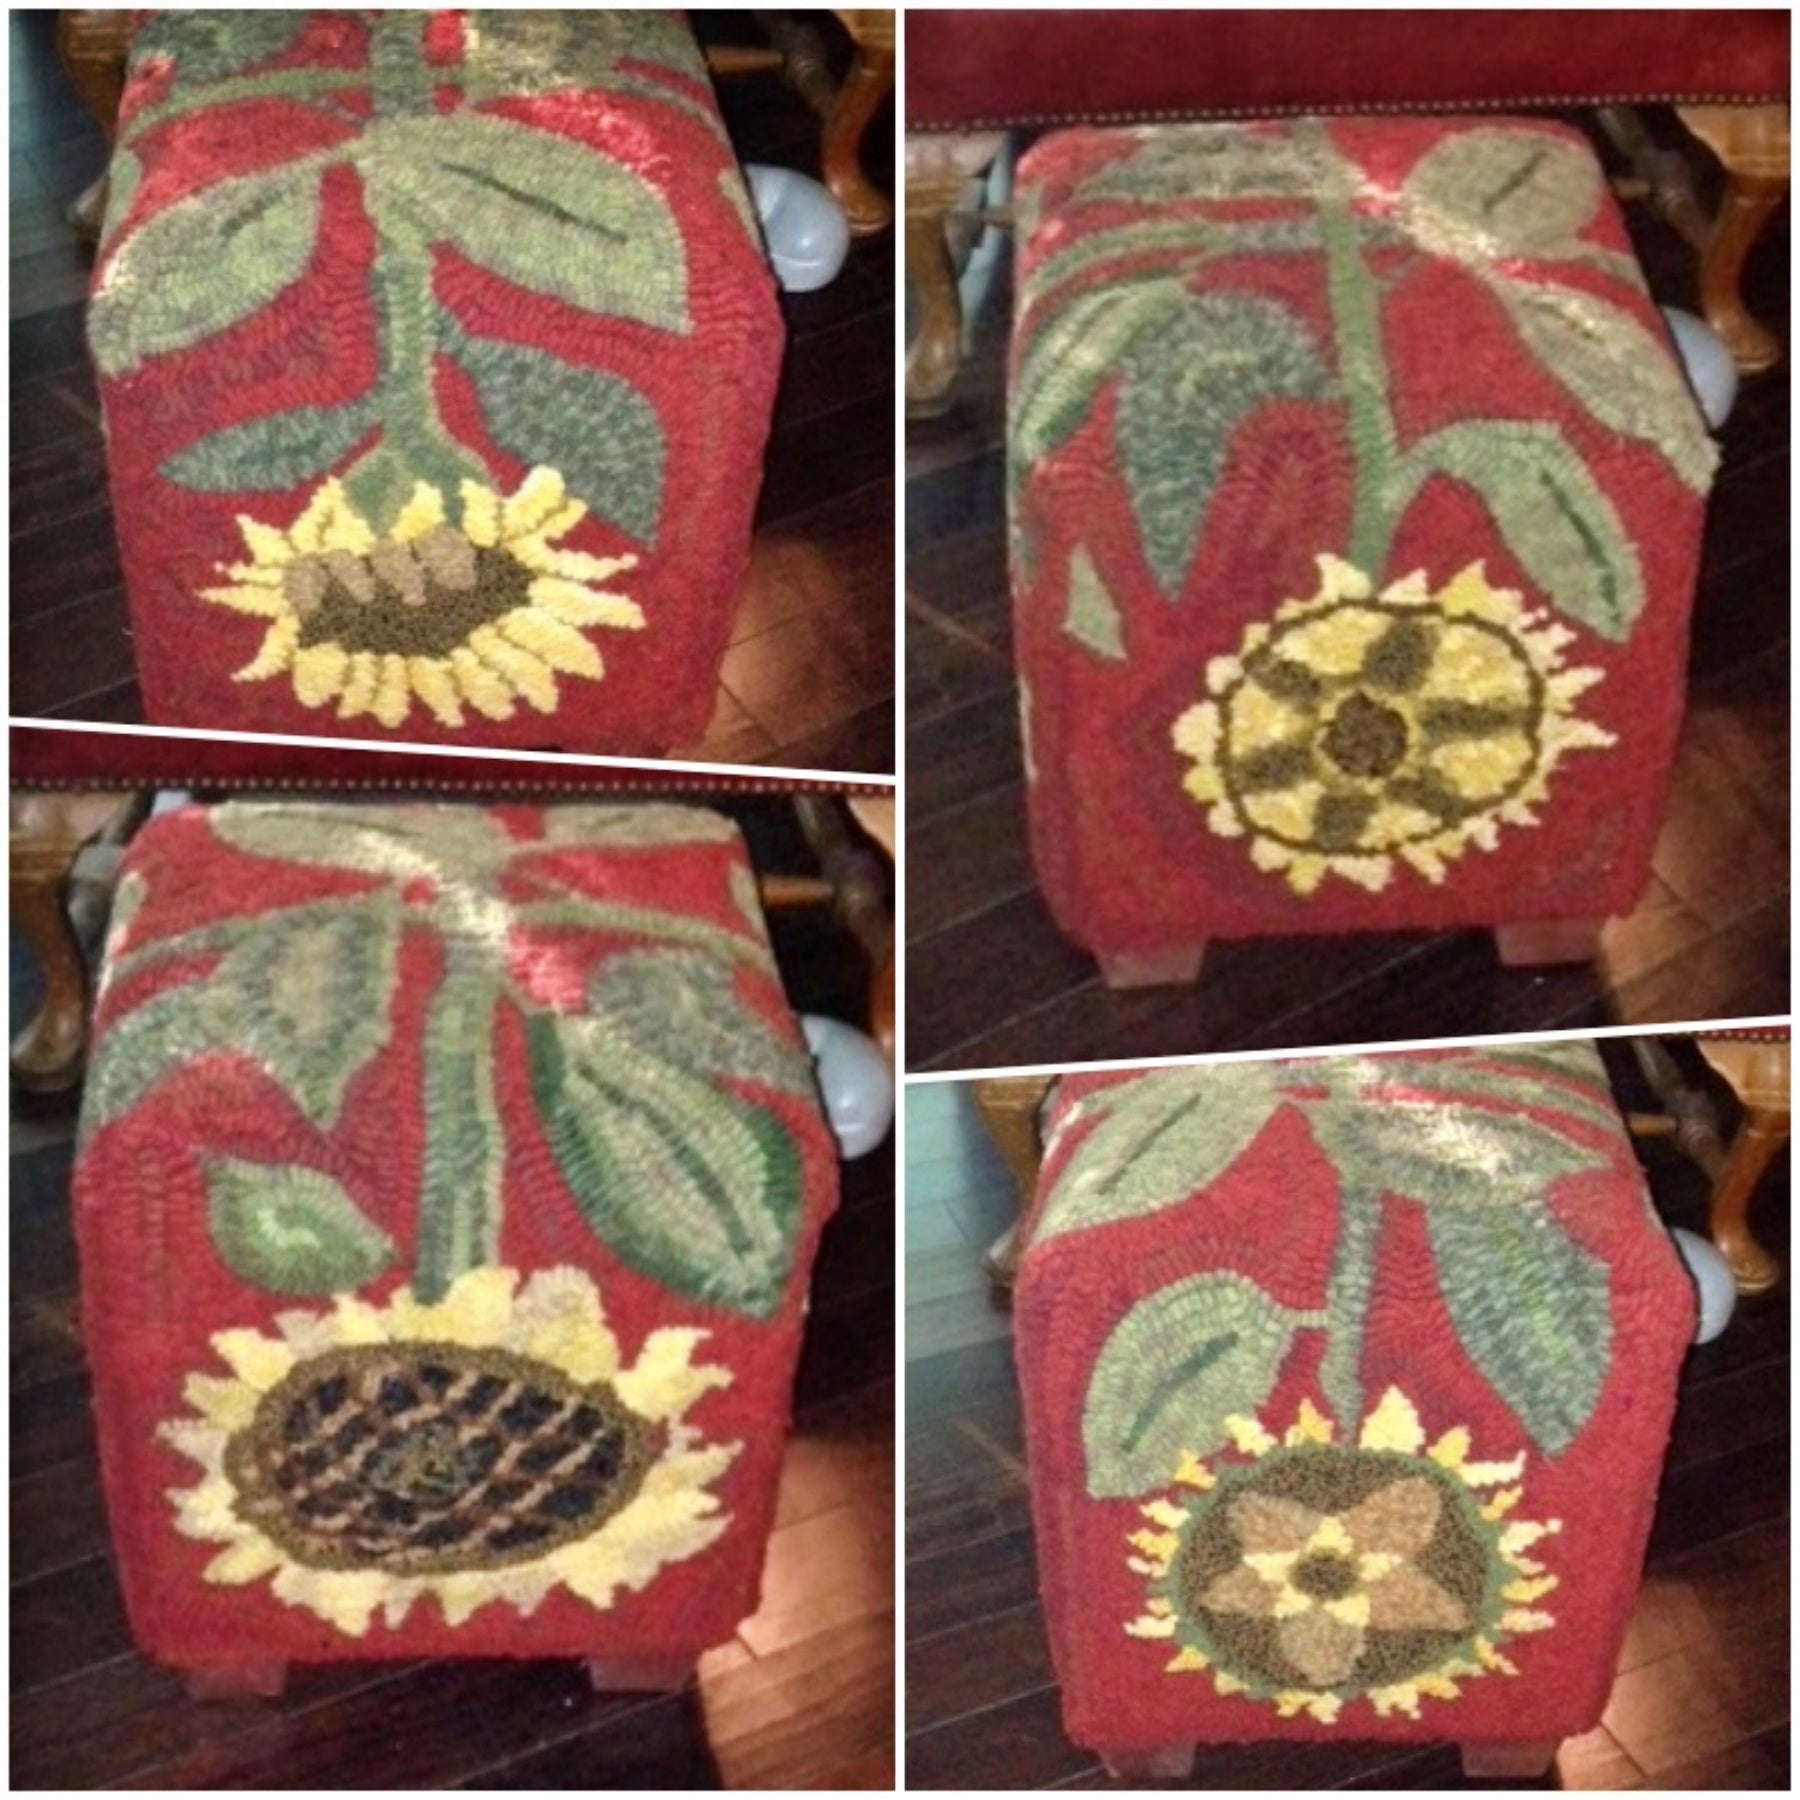 Sunflowers - Cube Footstool Pattern, rug hooked by Joan Bollaert